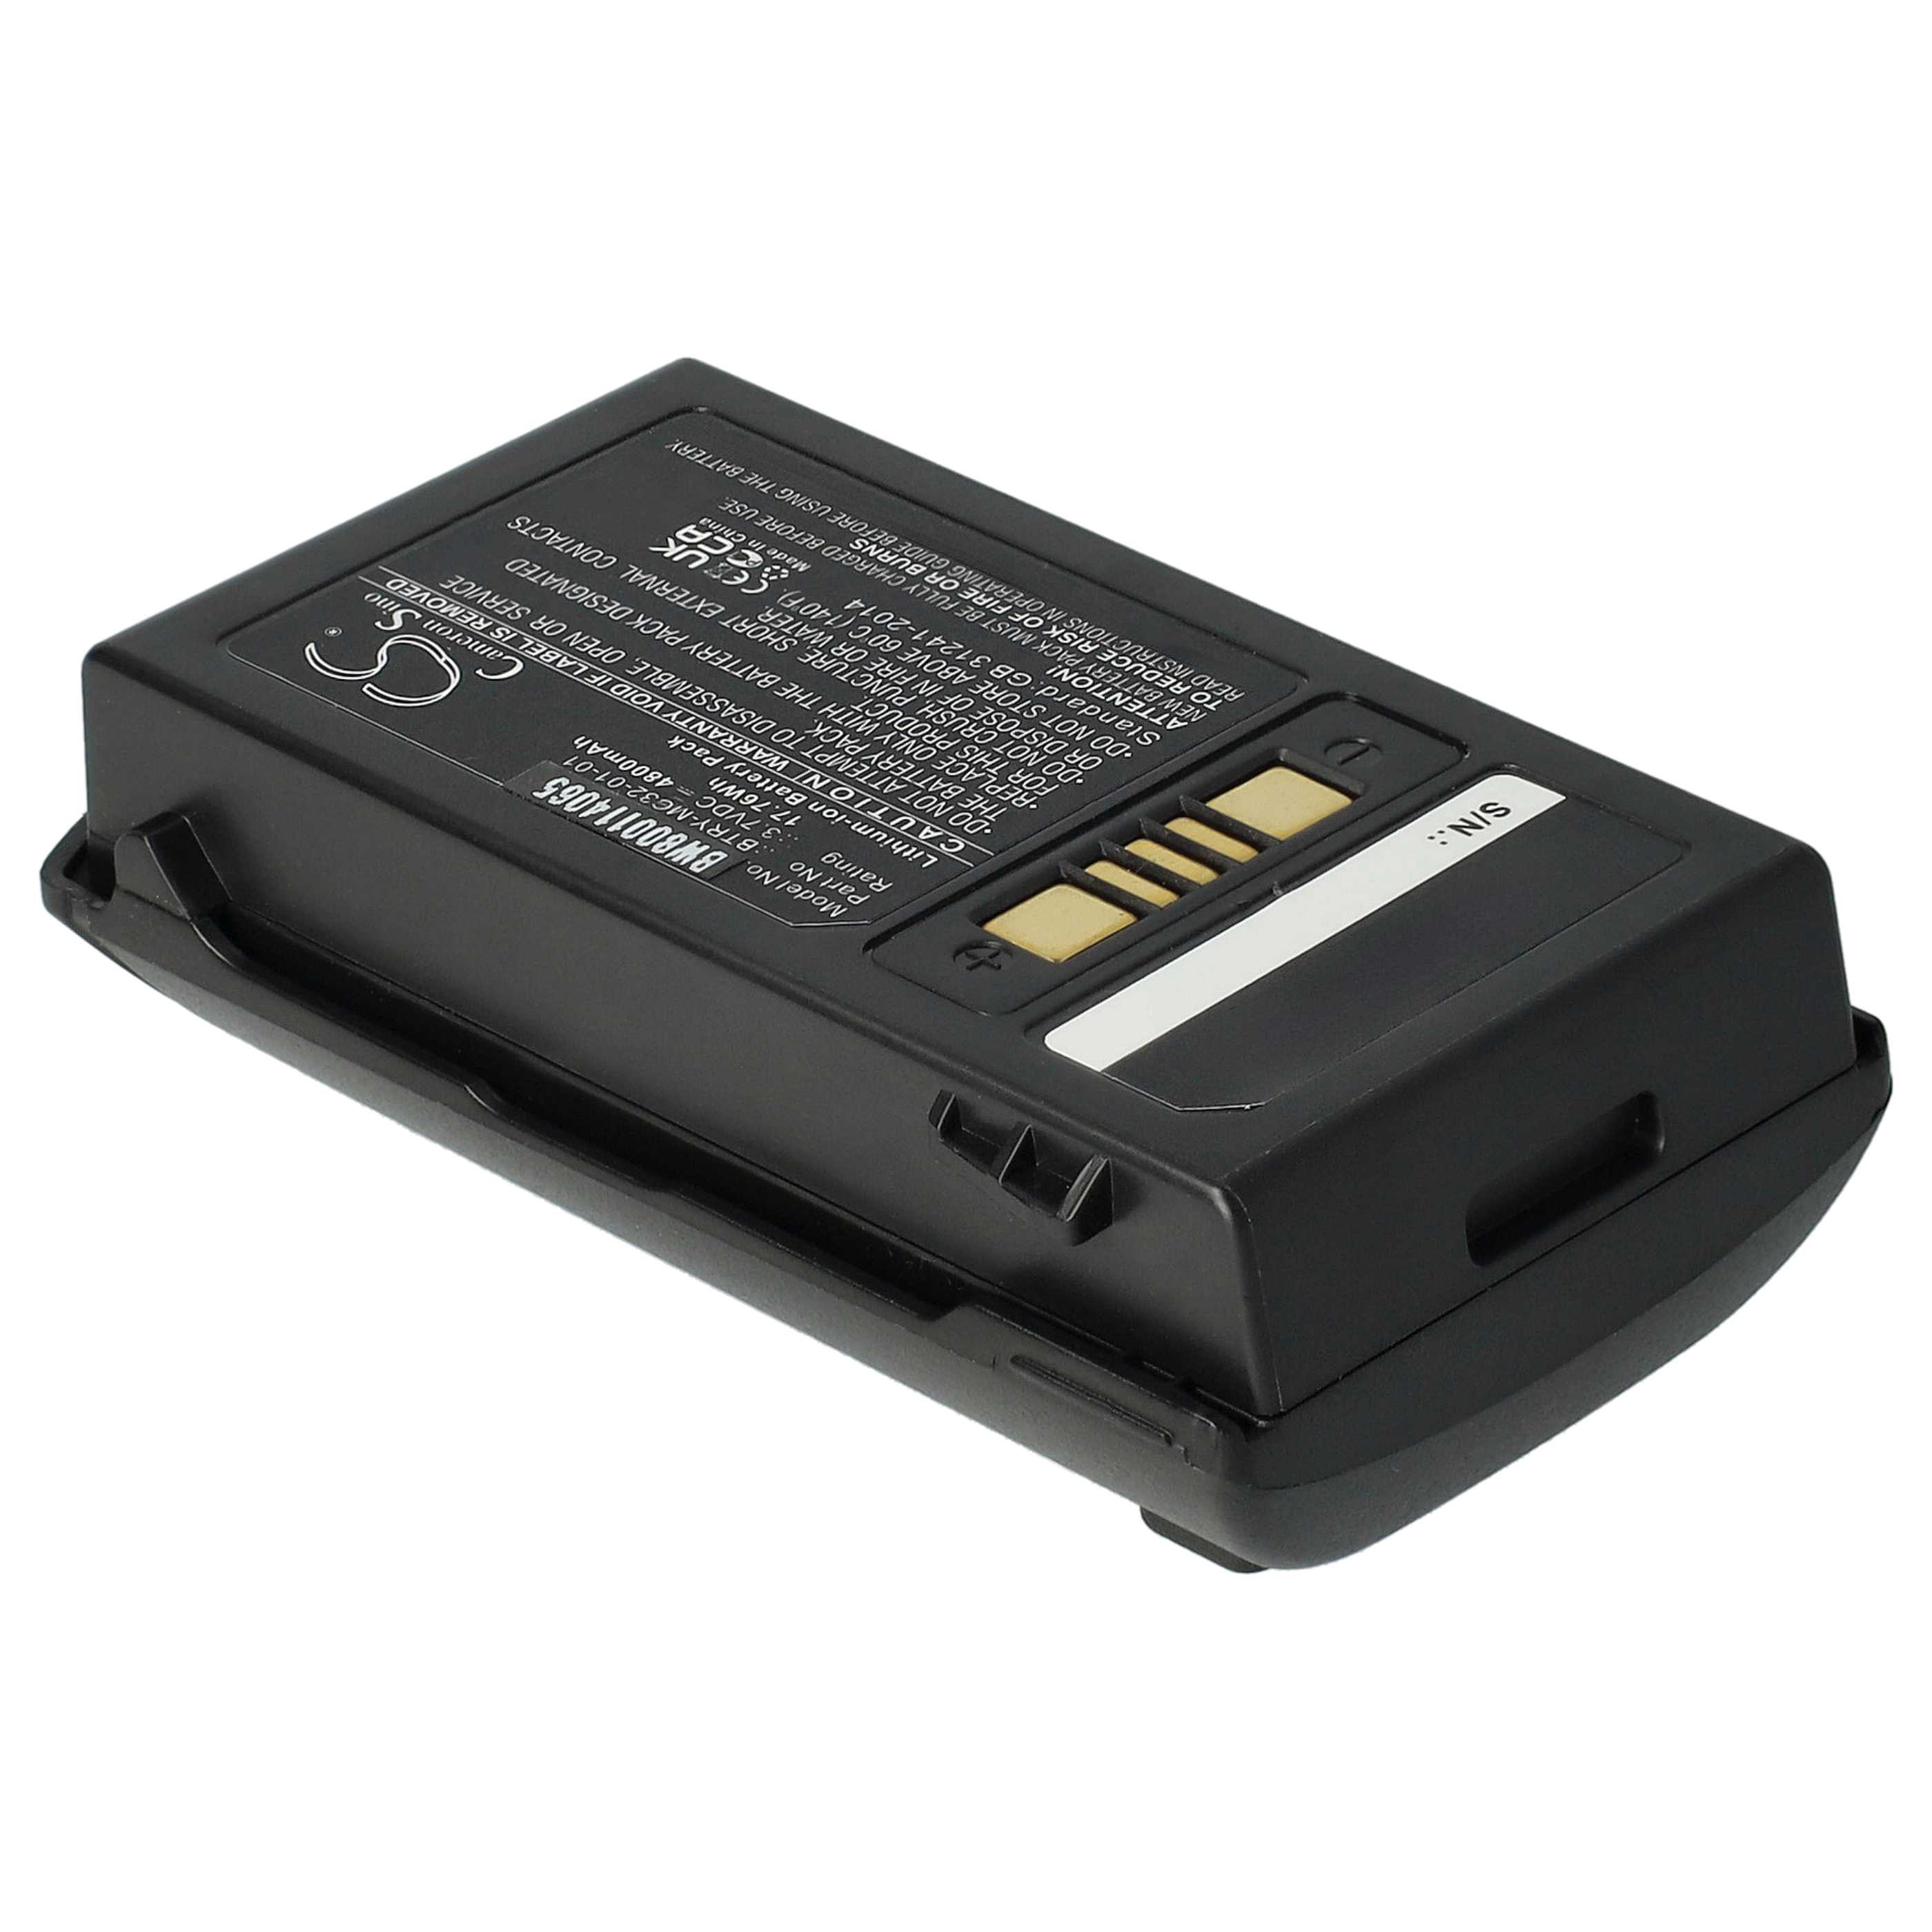 Barcode Scanner POS Battery Replacement for Motorola BTRY-MC32-01-01 - 4800mAh 3.7V Li-Ion